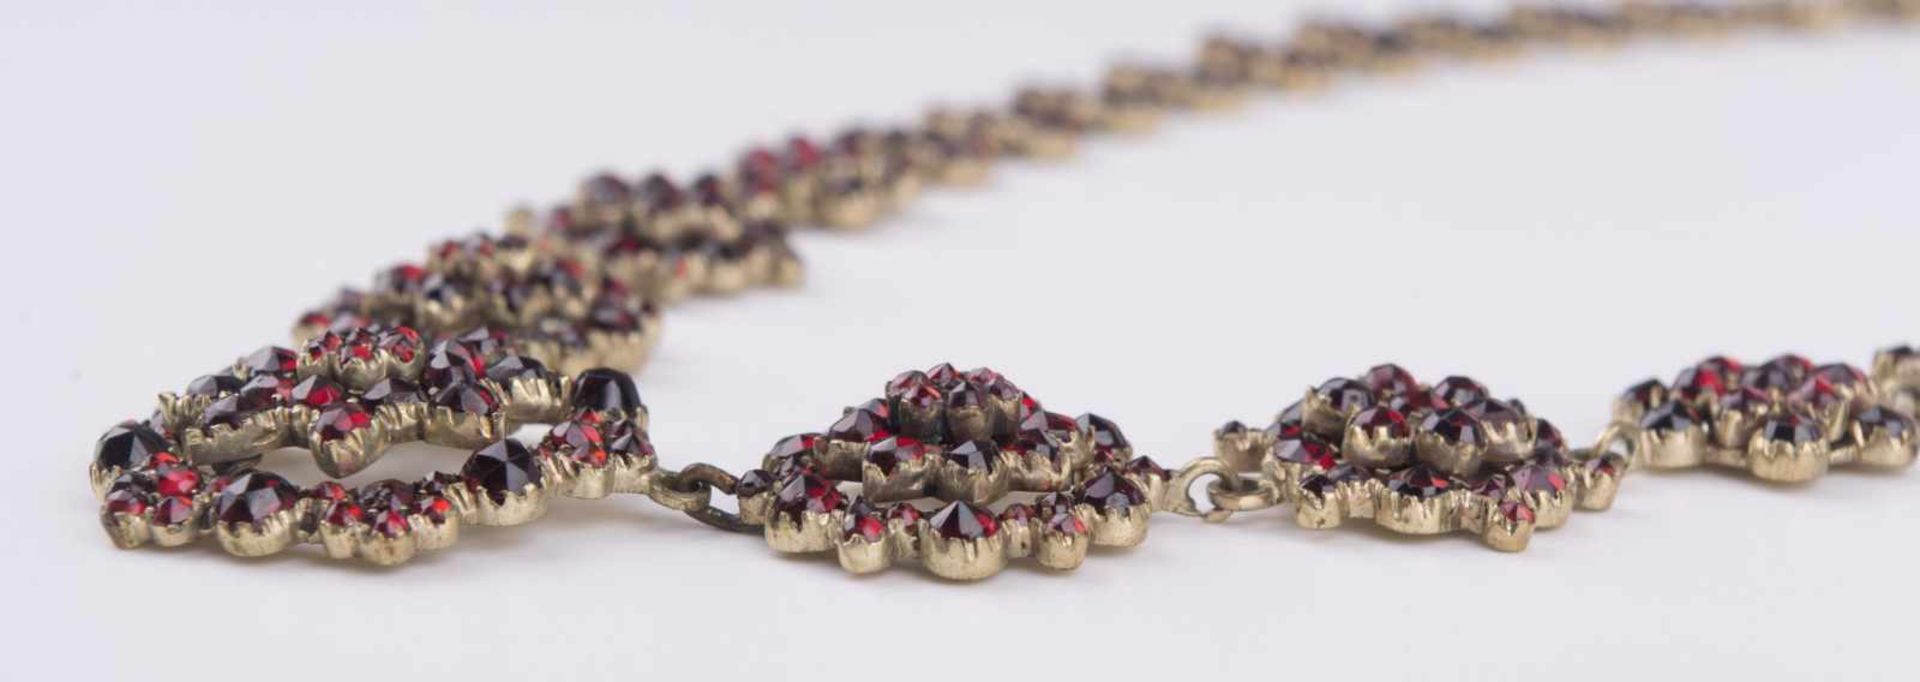 Granatcollier Böhmen um 1900 / Garnet necklace, Bohemia about 1900 L: ca. 50 cm - Bild 6 aus 10